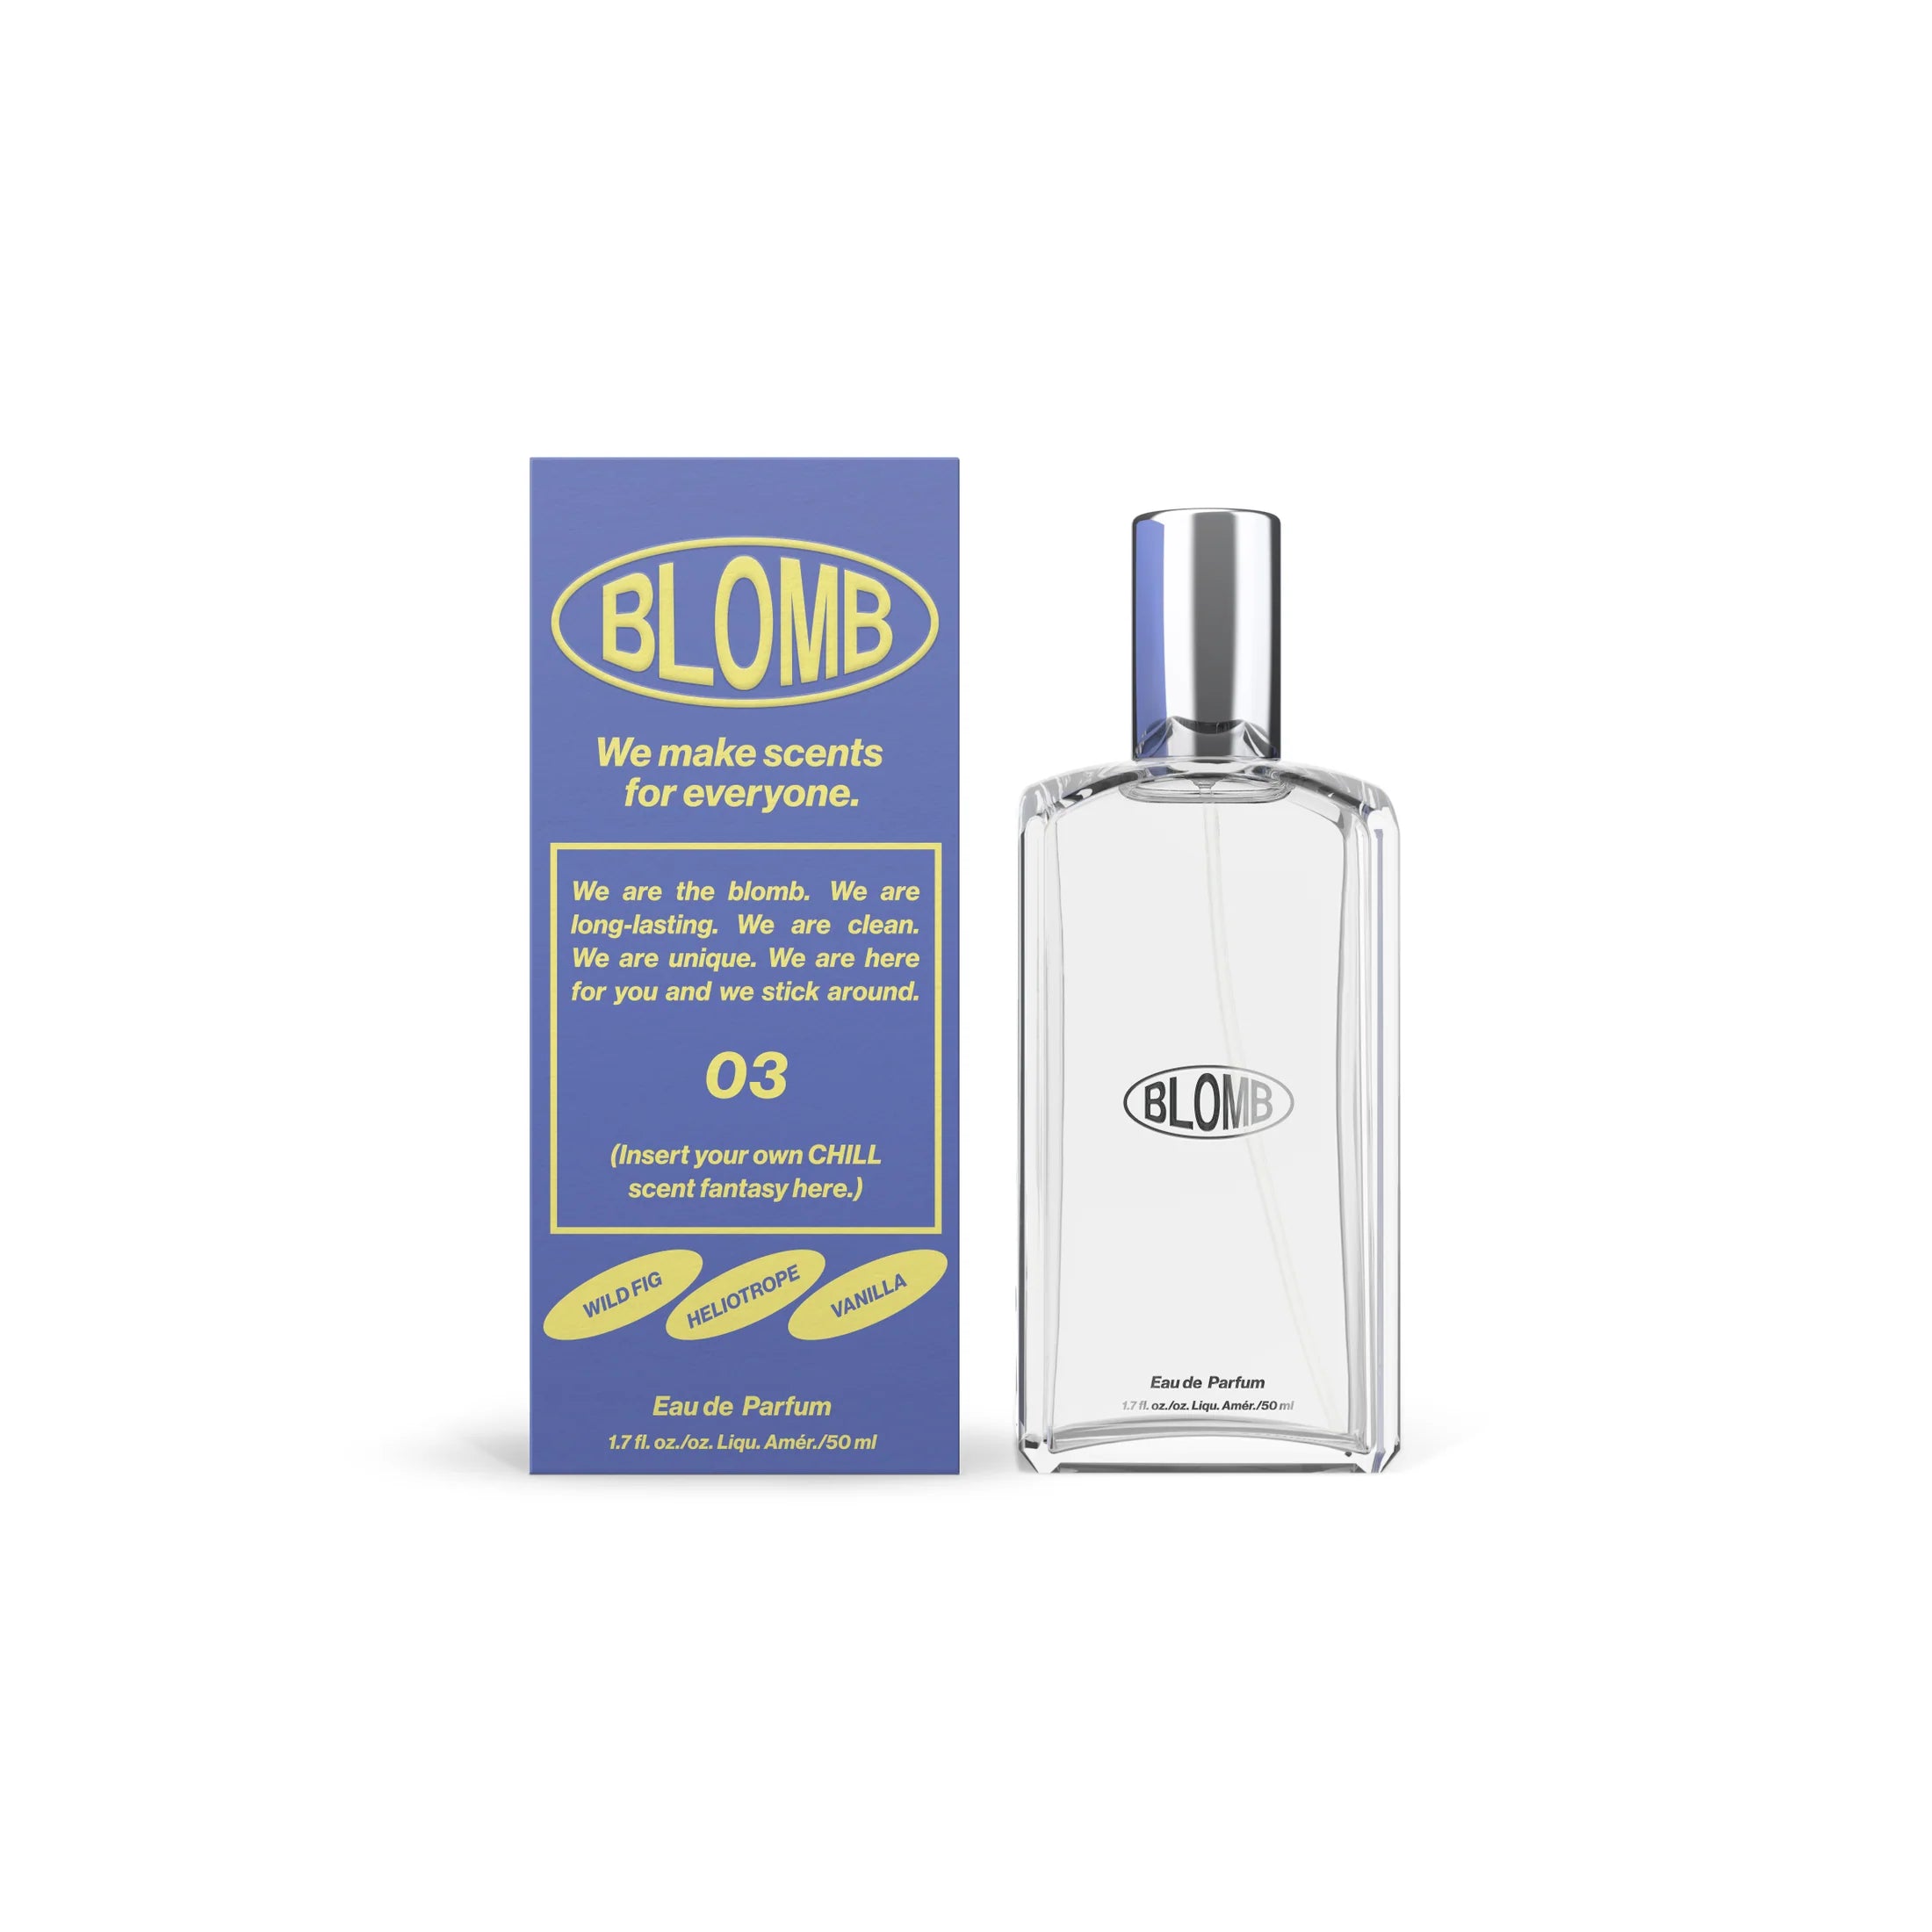 Blomb No. 03 50ml Eau de Parfum